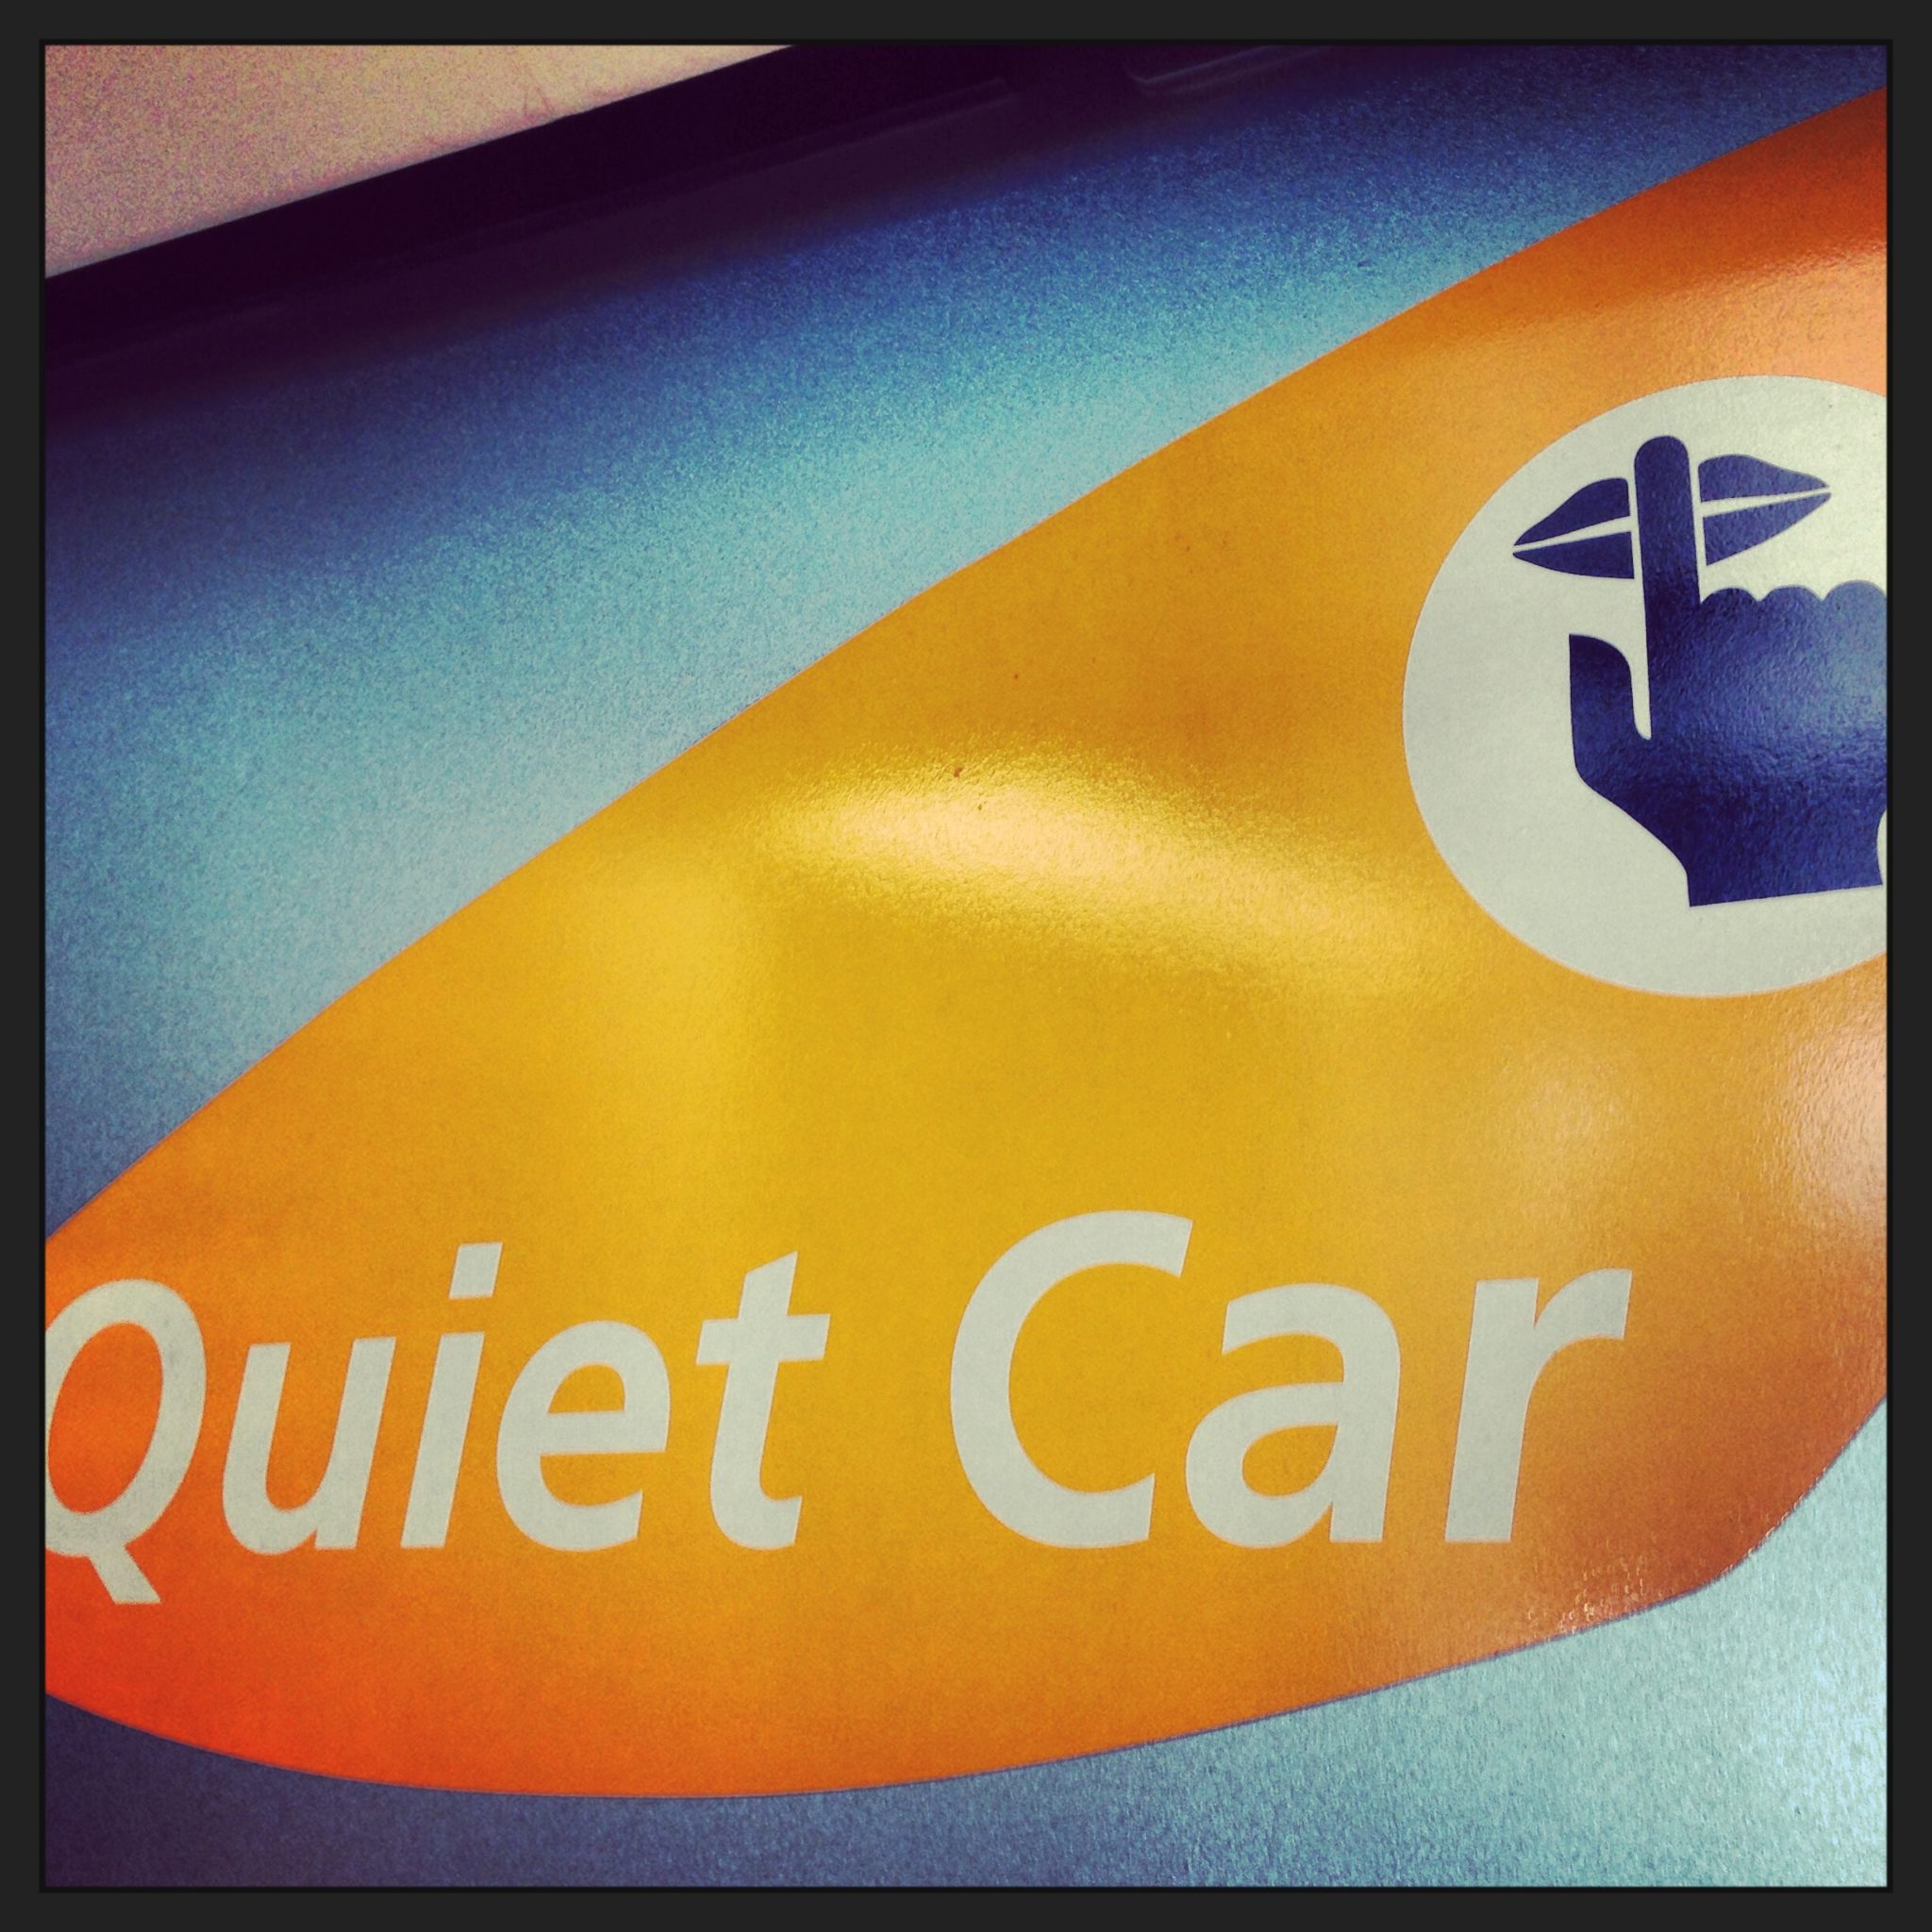 Acela Quiet Car